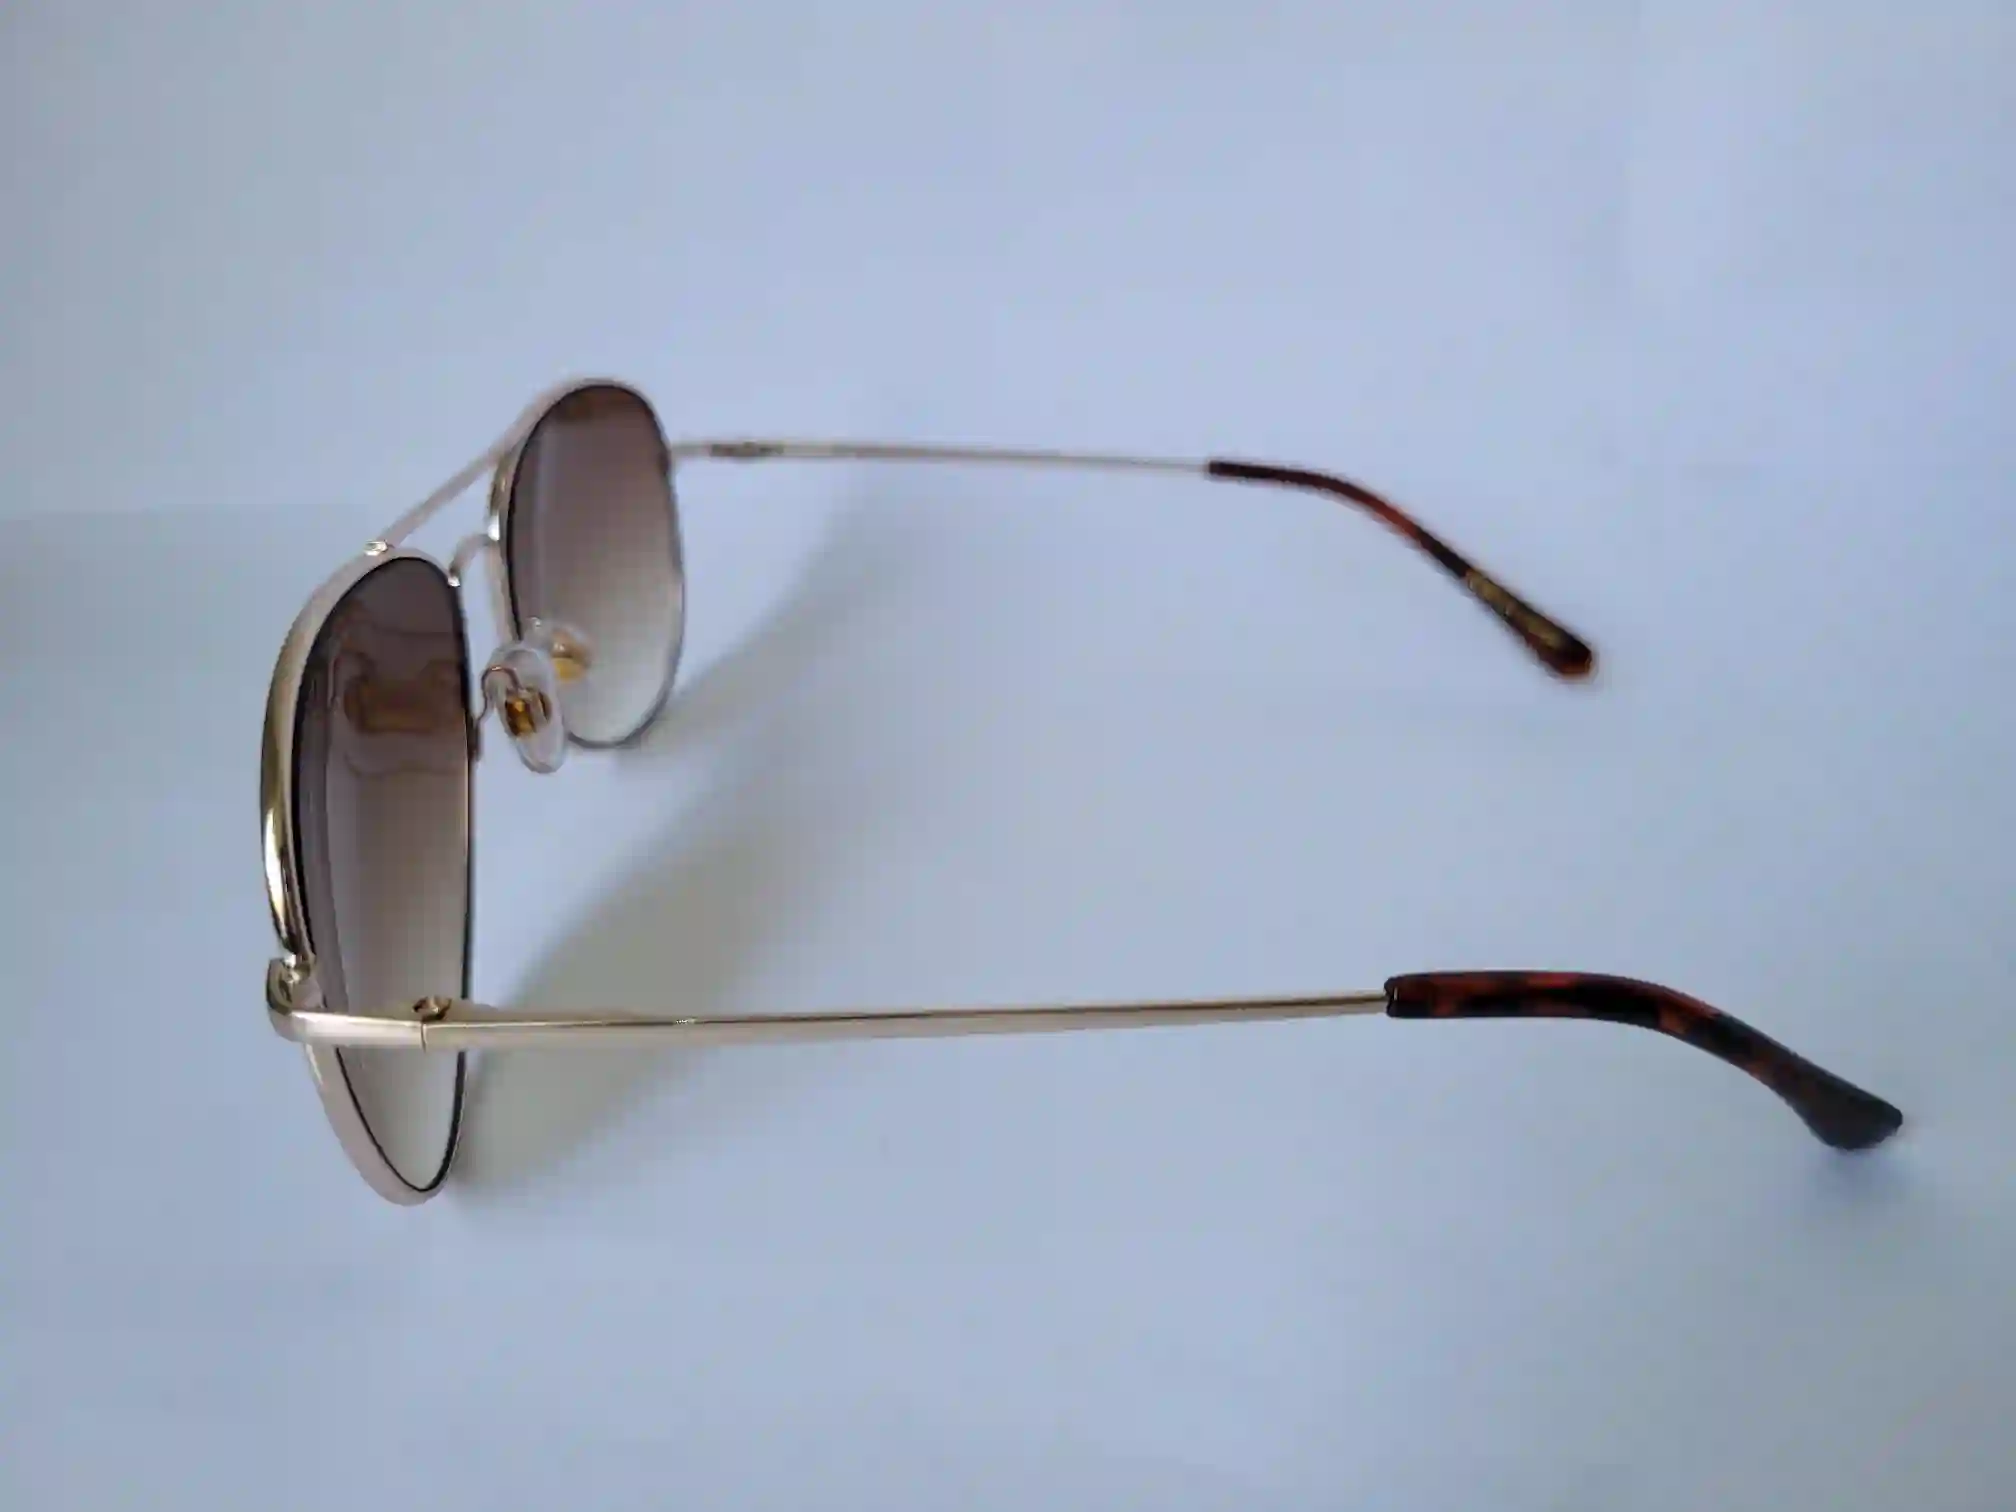 FOSTER GRANT outlet saulesbrilles